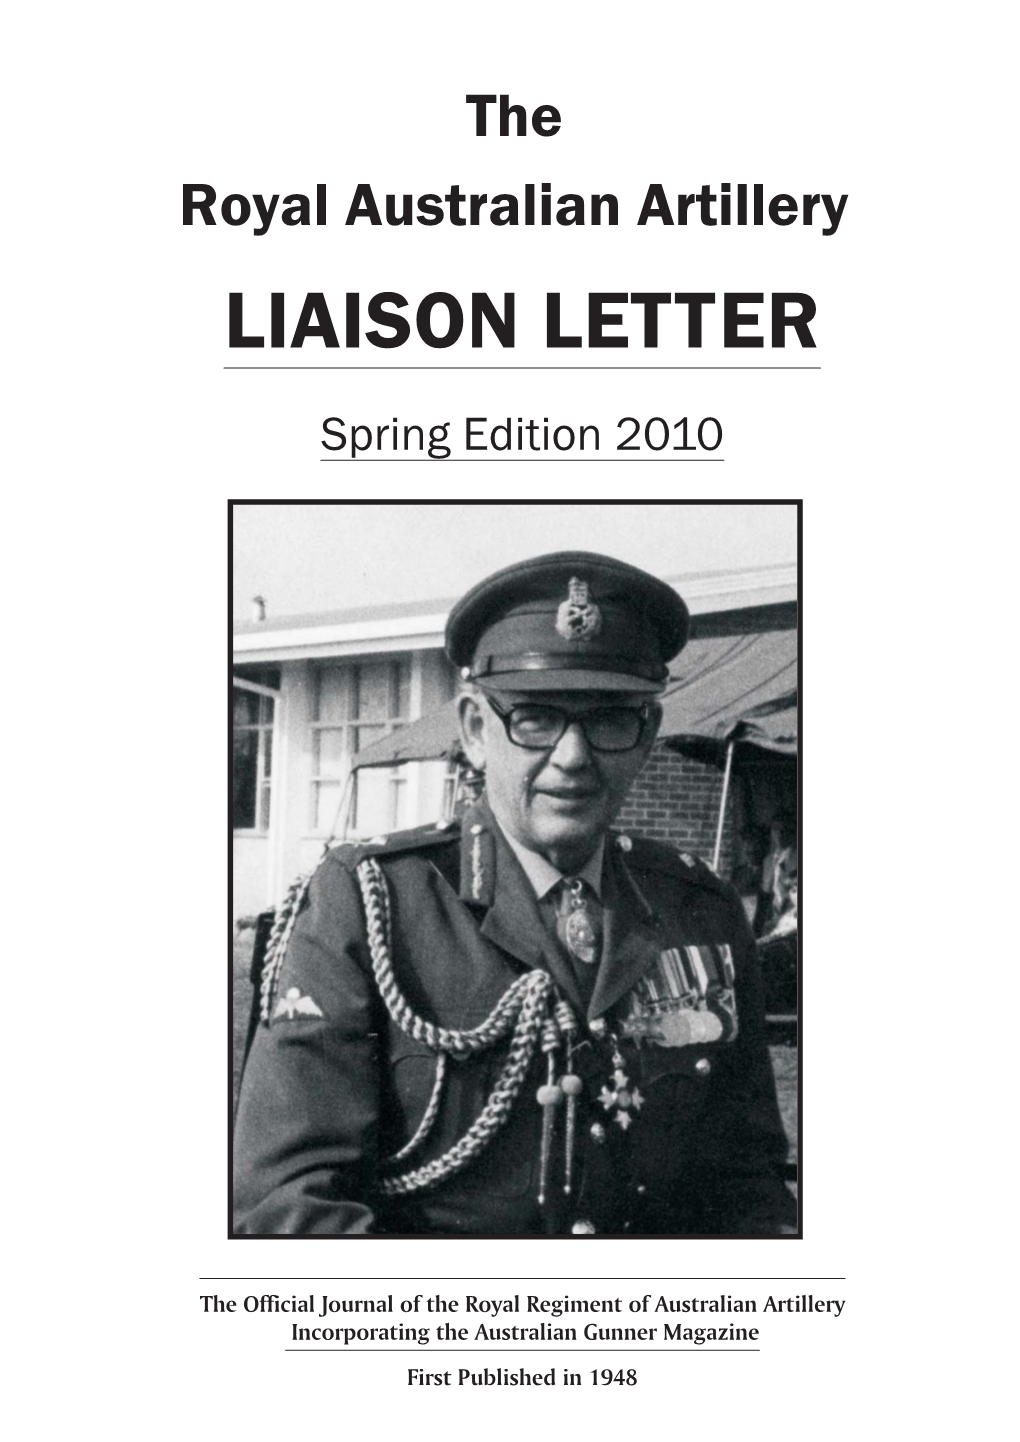 RAA Liaison Letter Spring 2010